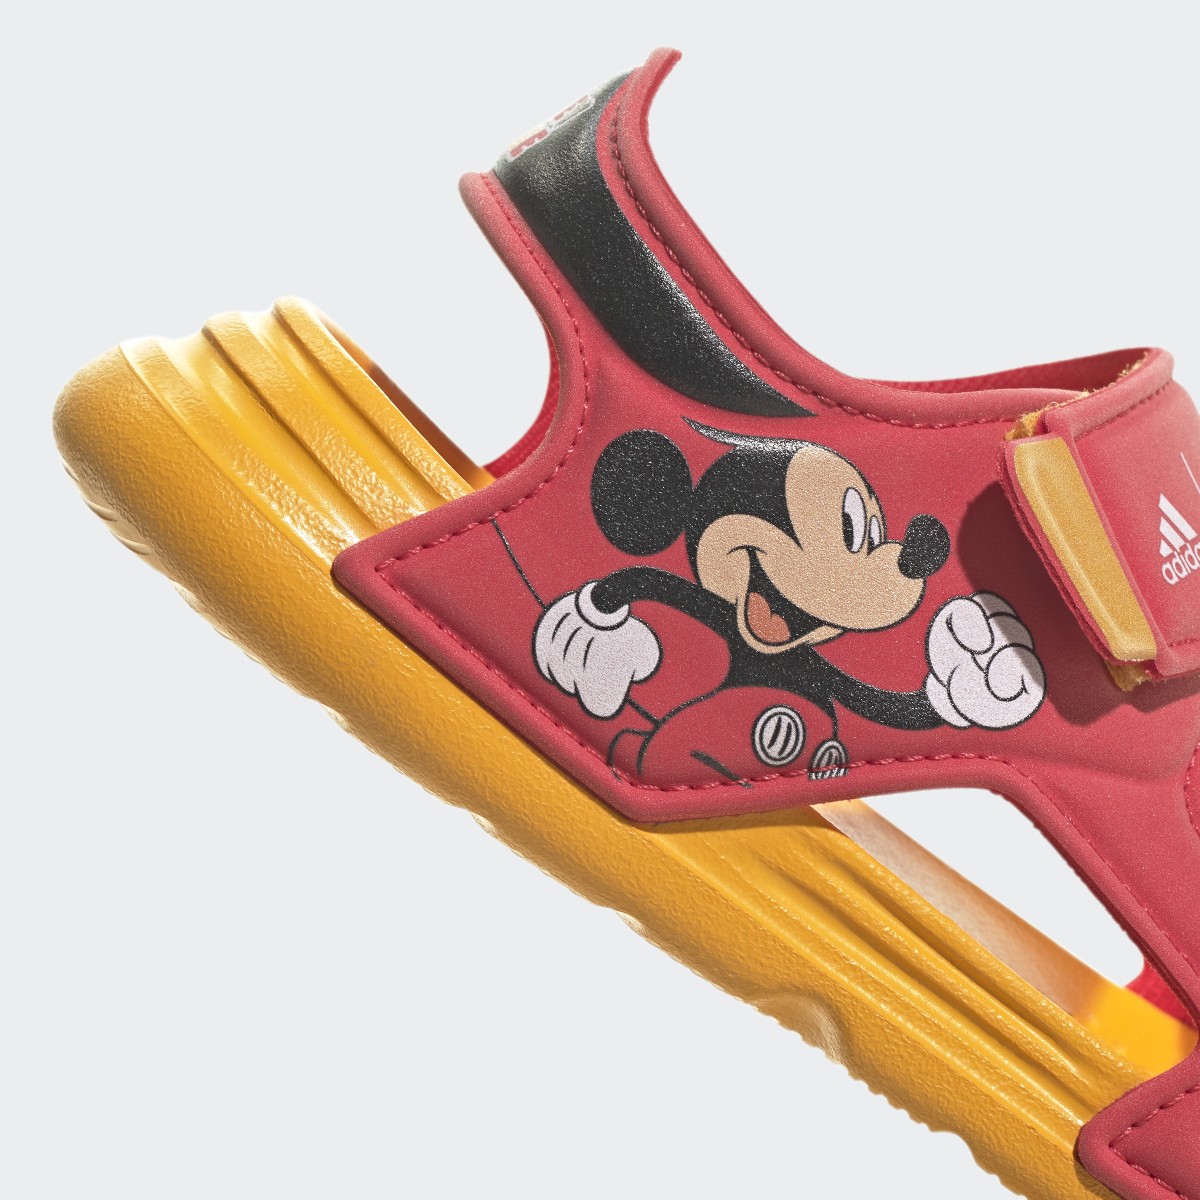 Adidas Claquette adidas x Disney Mickey Mouse AltaSwim. 9